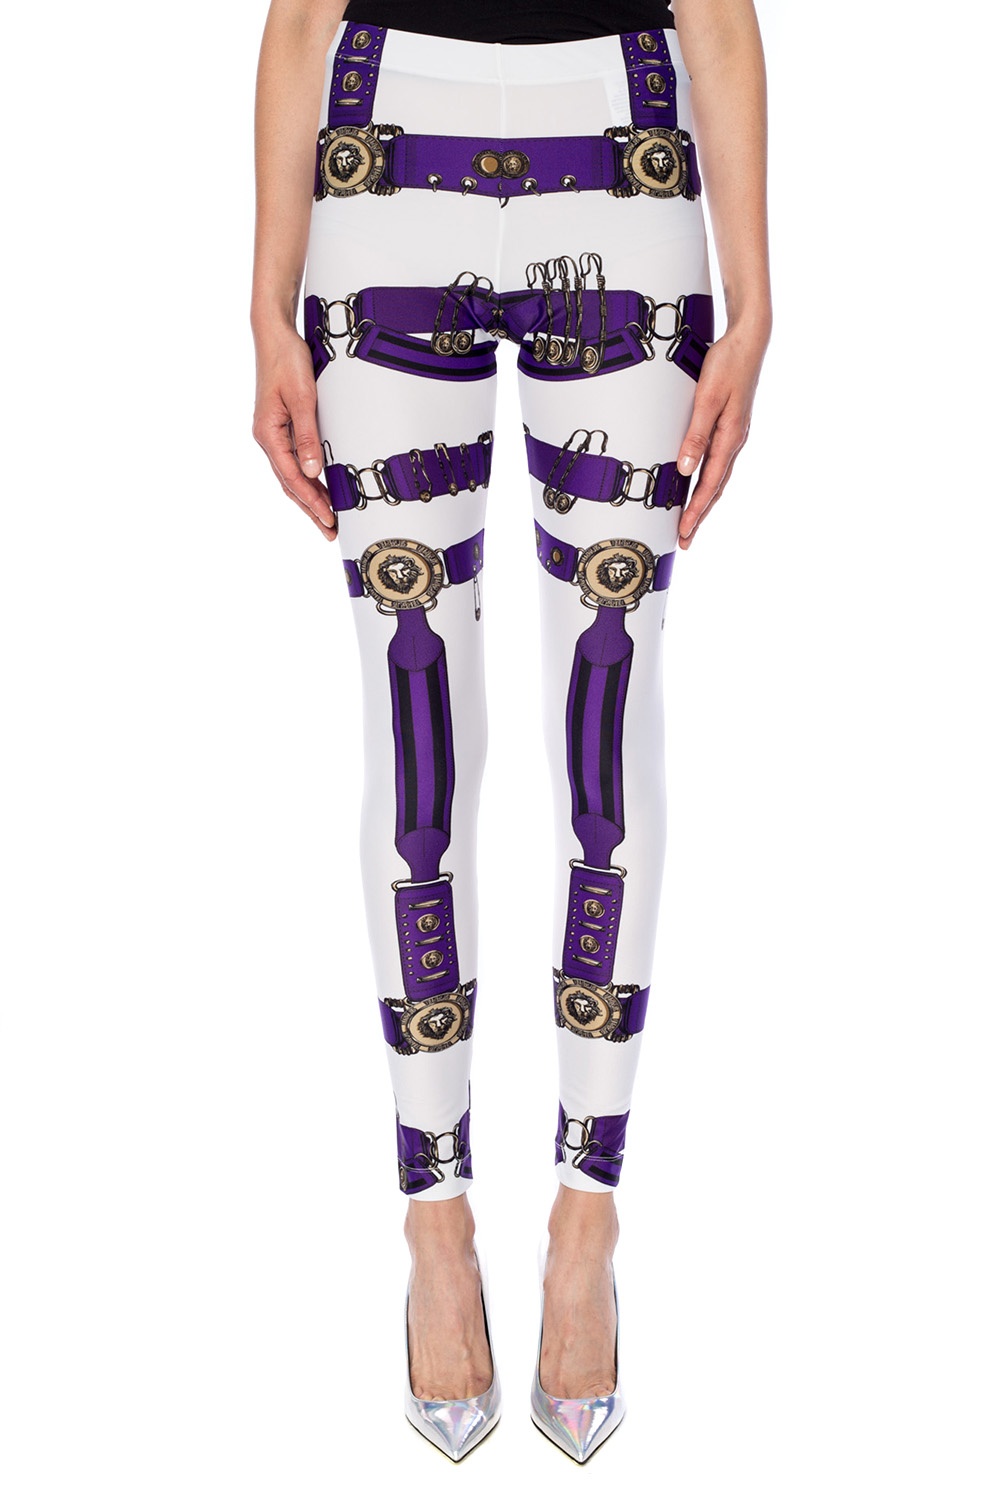 versus versace leggings